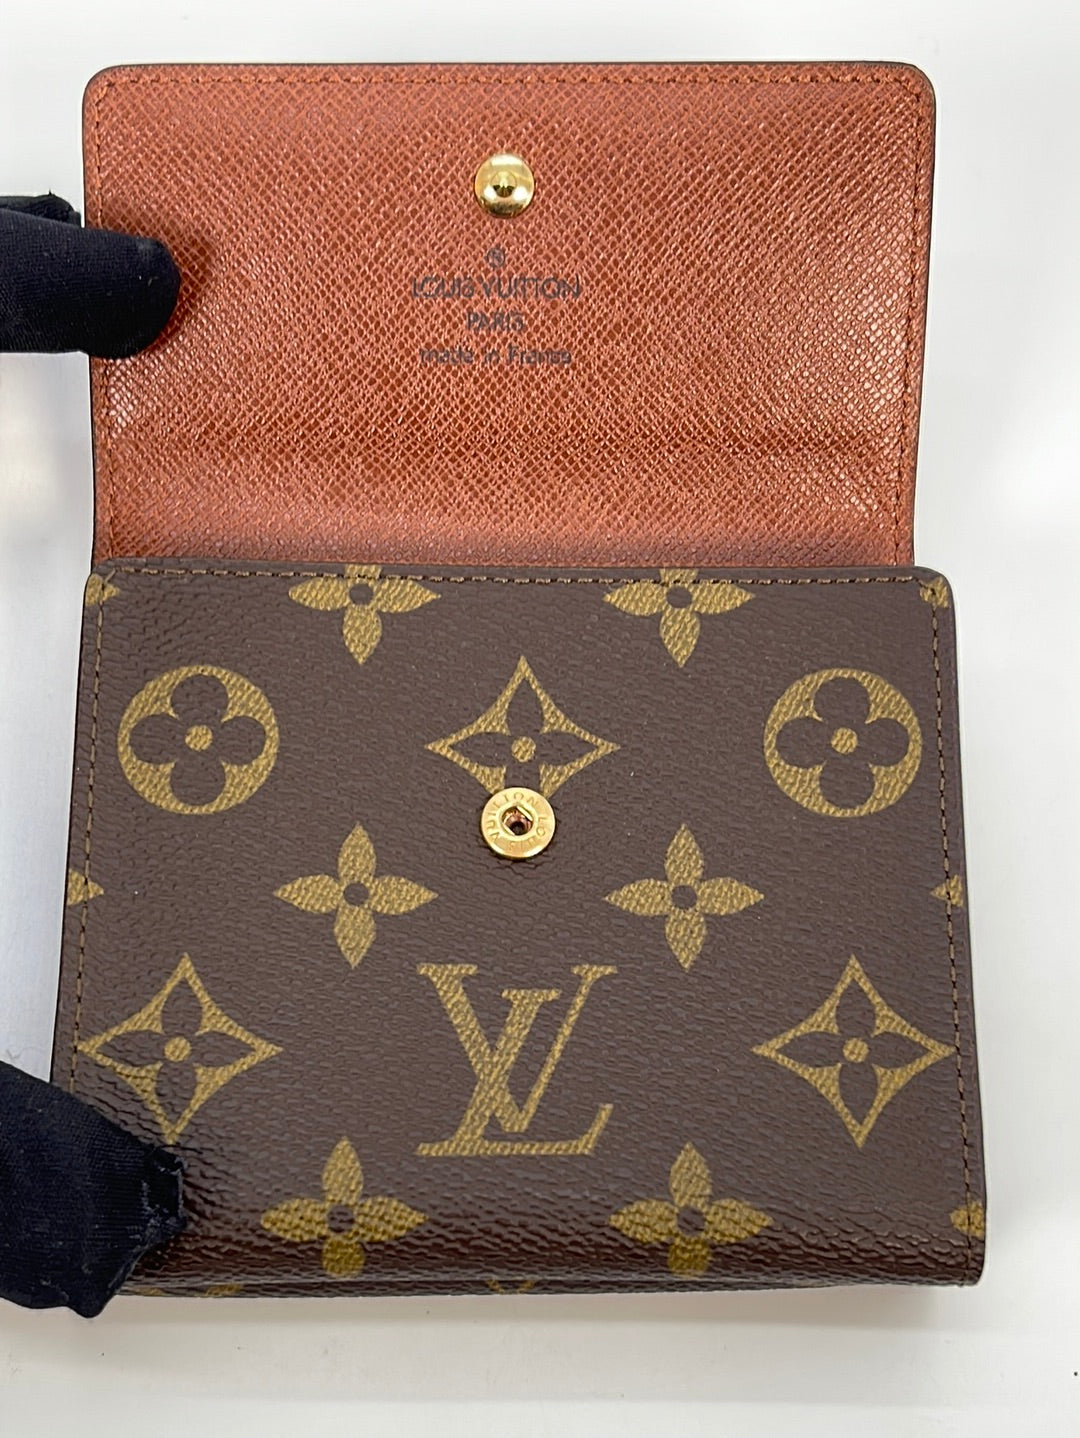 Authentic Louis Vuitton Epi Portefeuille Elise Trifold Yellow